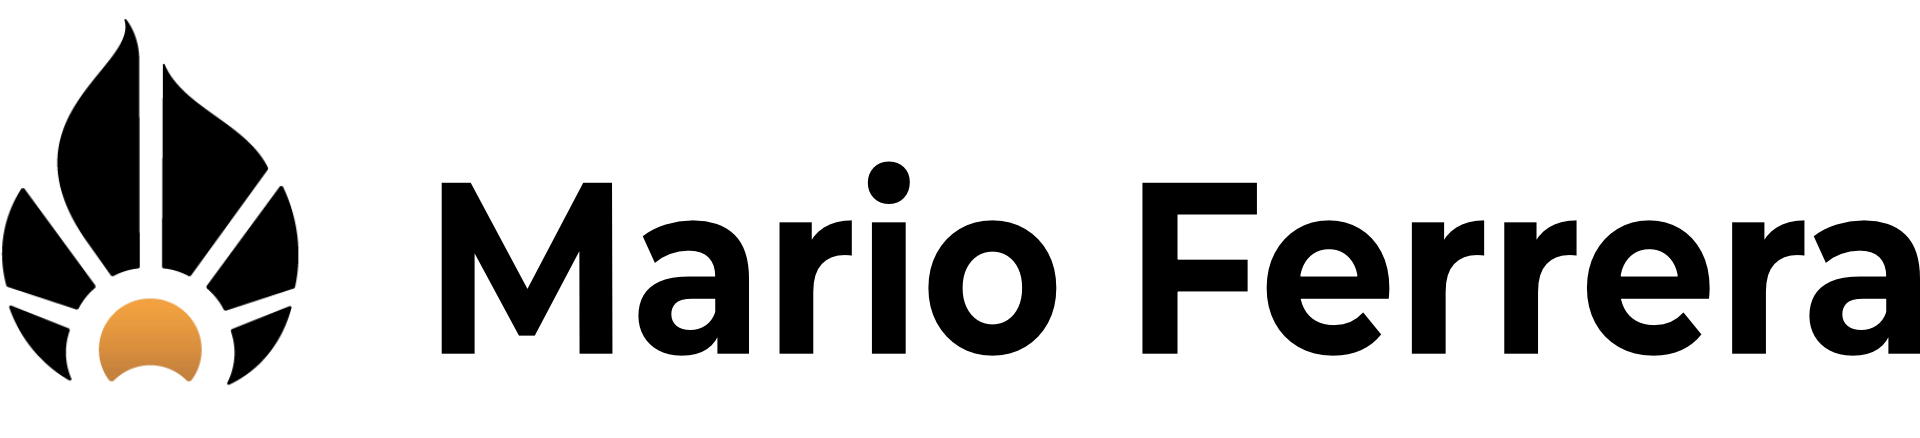 ardent ethos brand logo